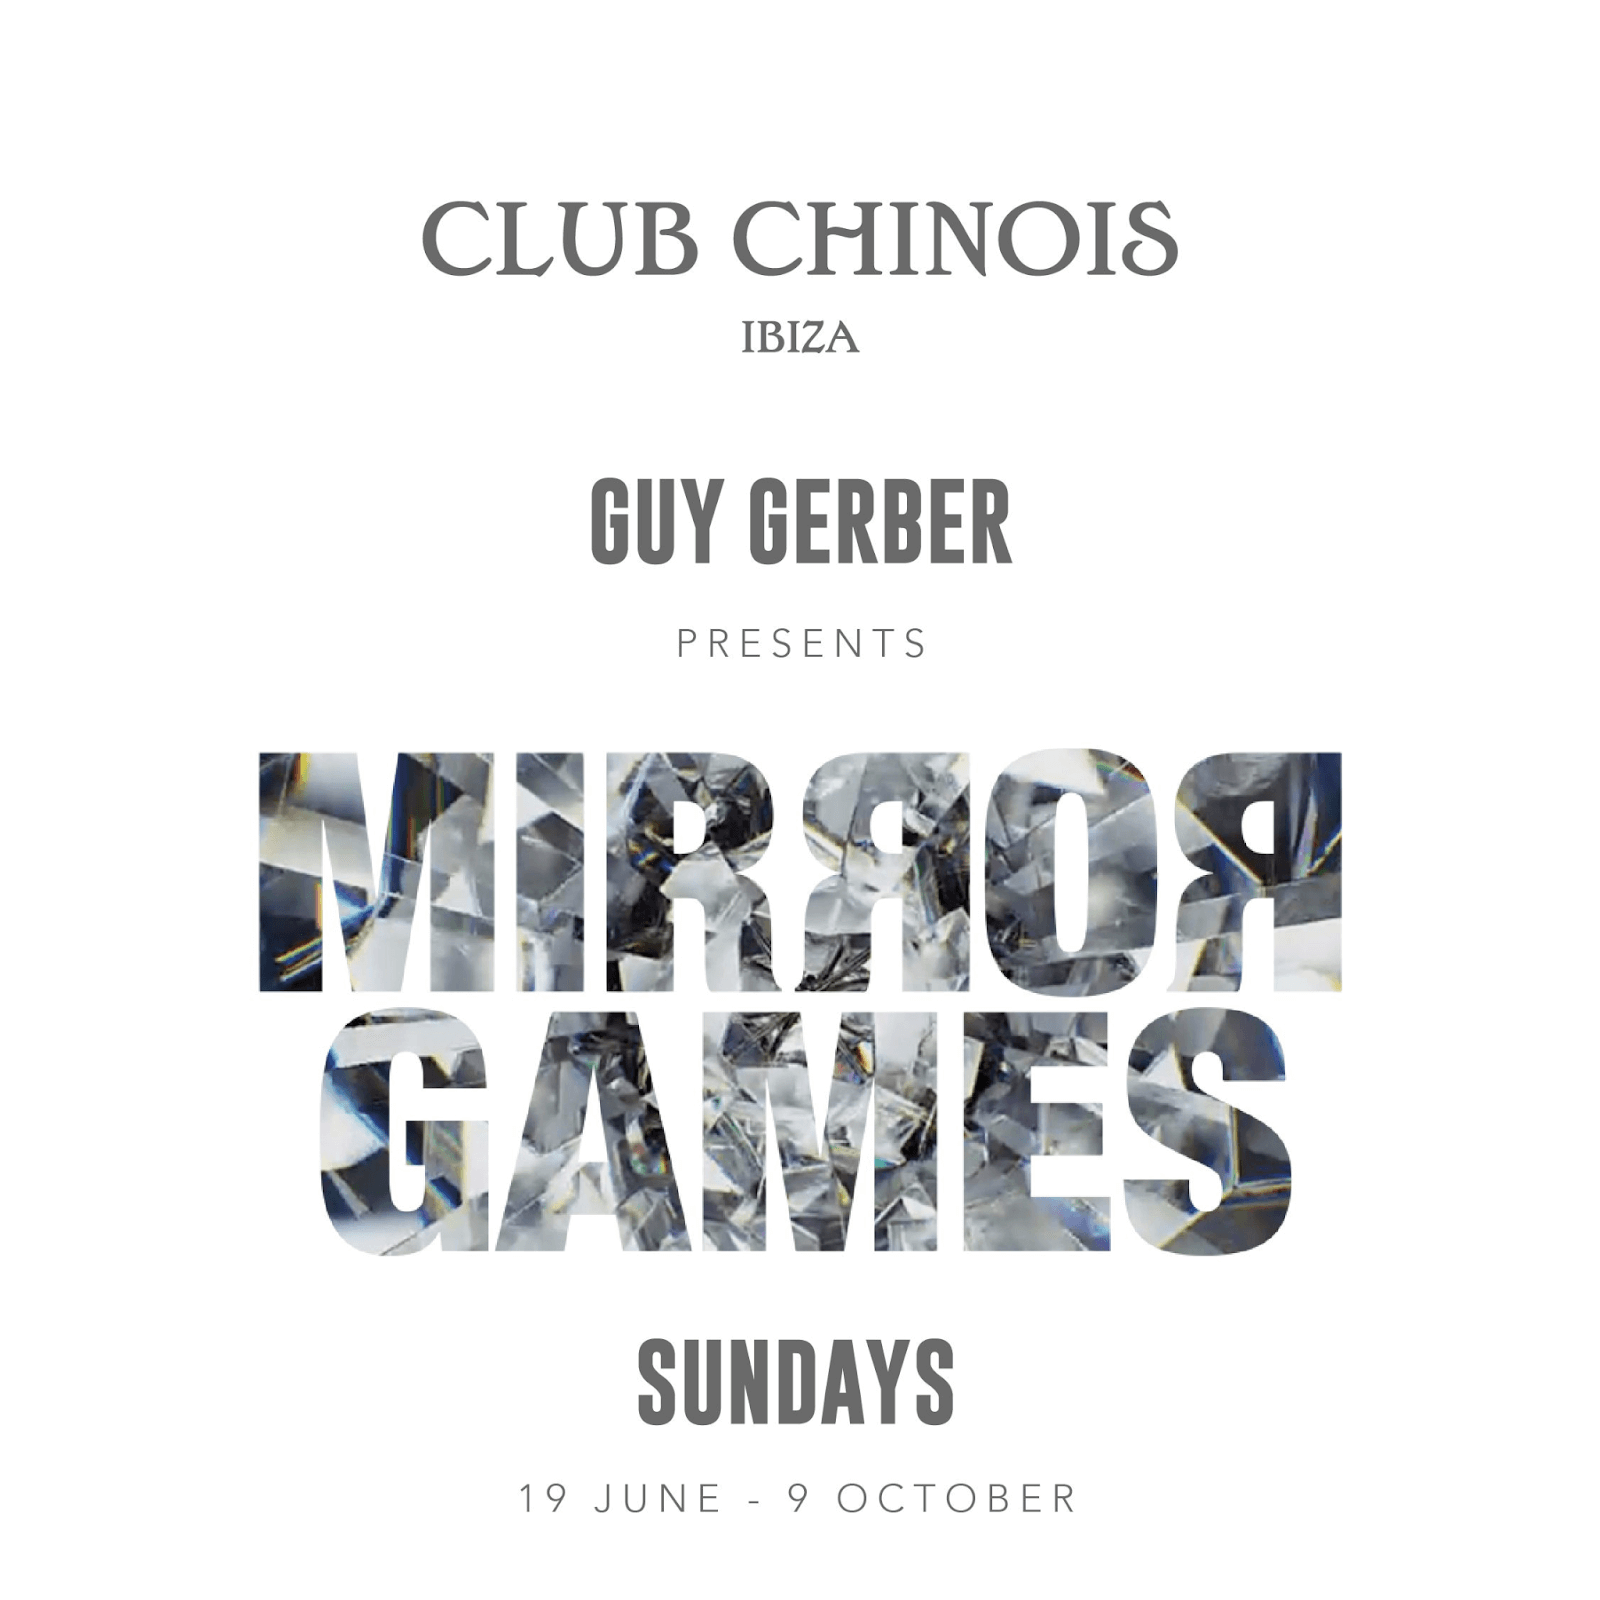 Each Sunday, meet DJ Guy Gerber at Club Chinois !